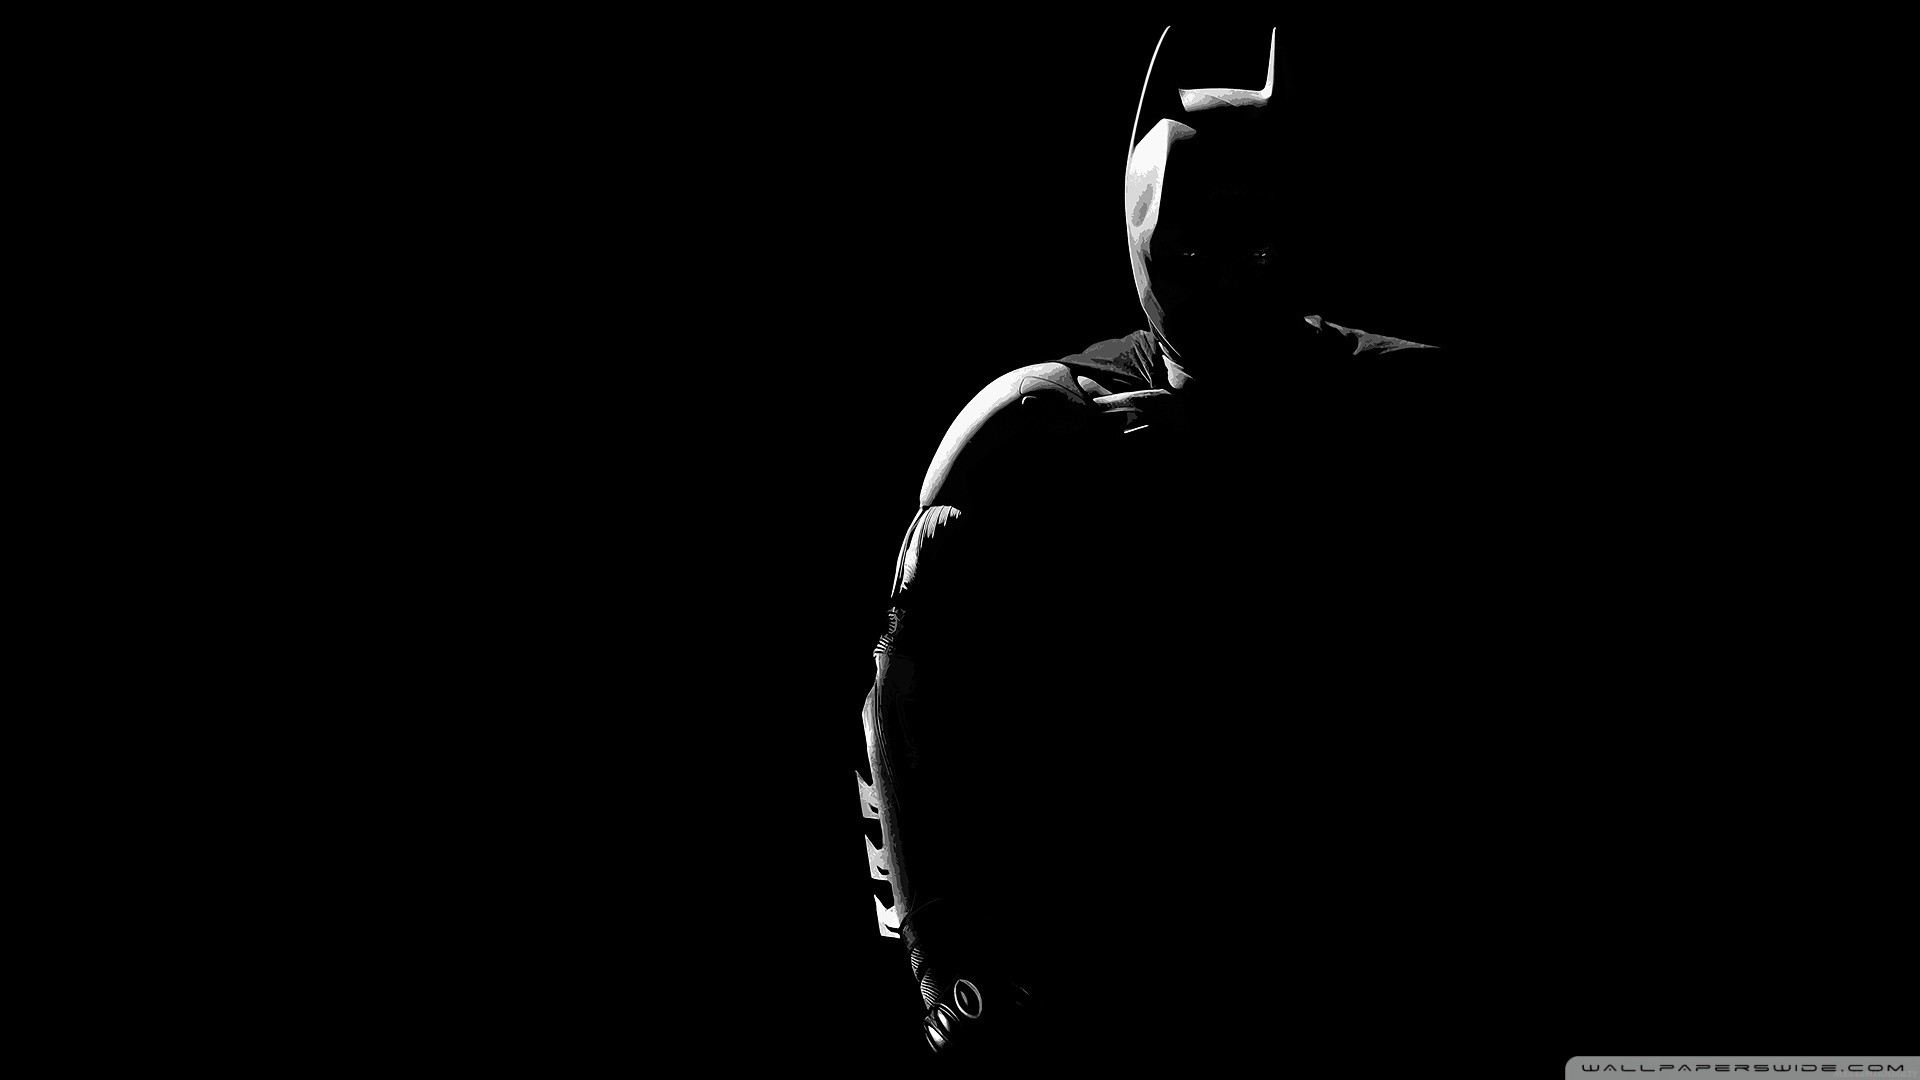 Wallpapers de Batman The Dark Knight Rises por Taboola por Taboola